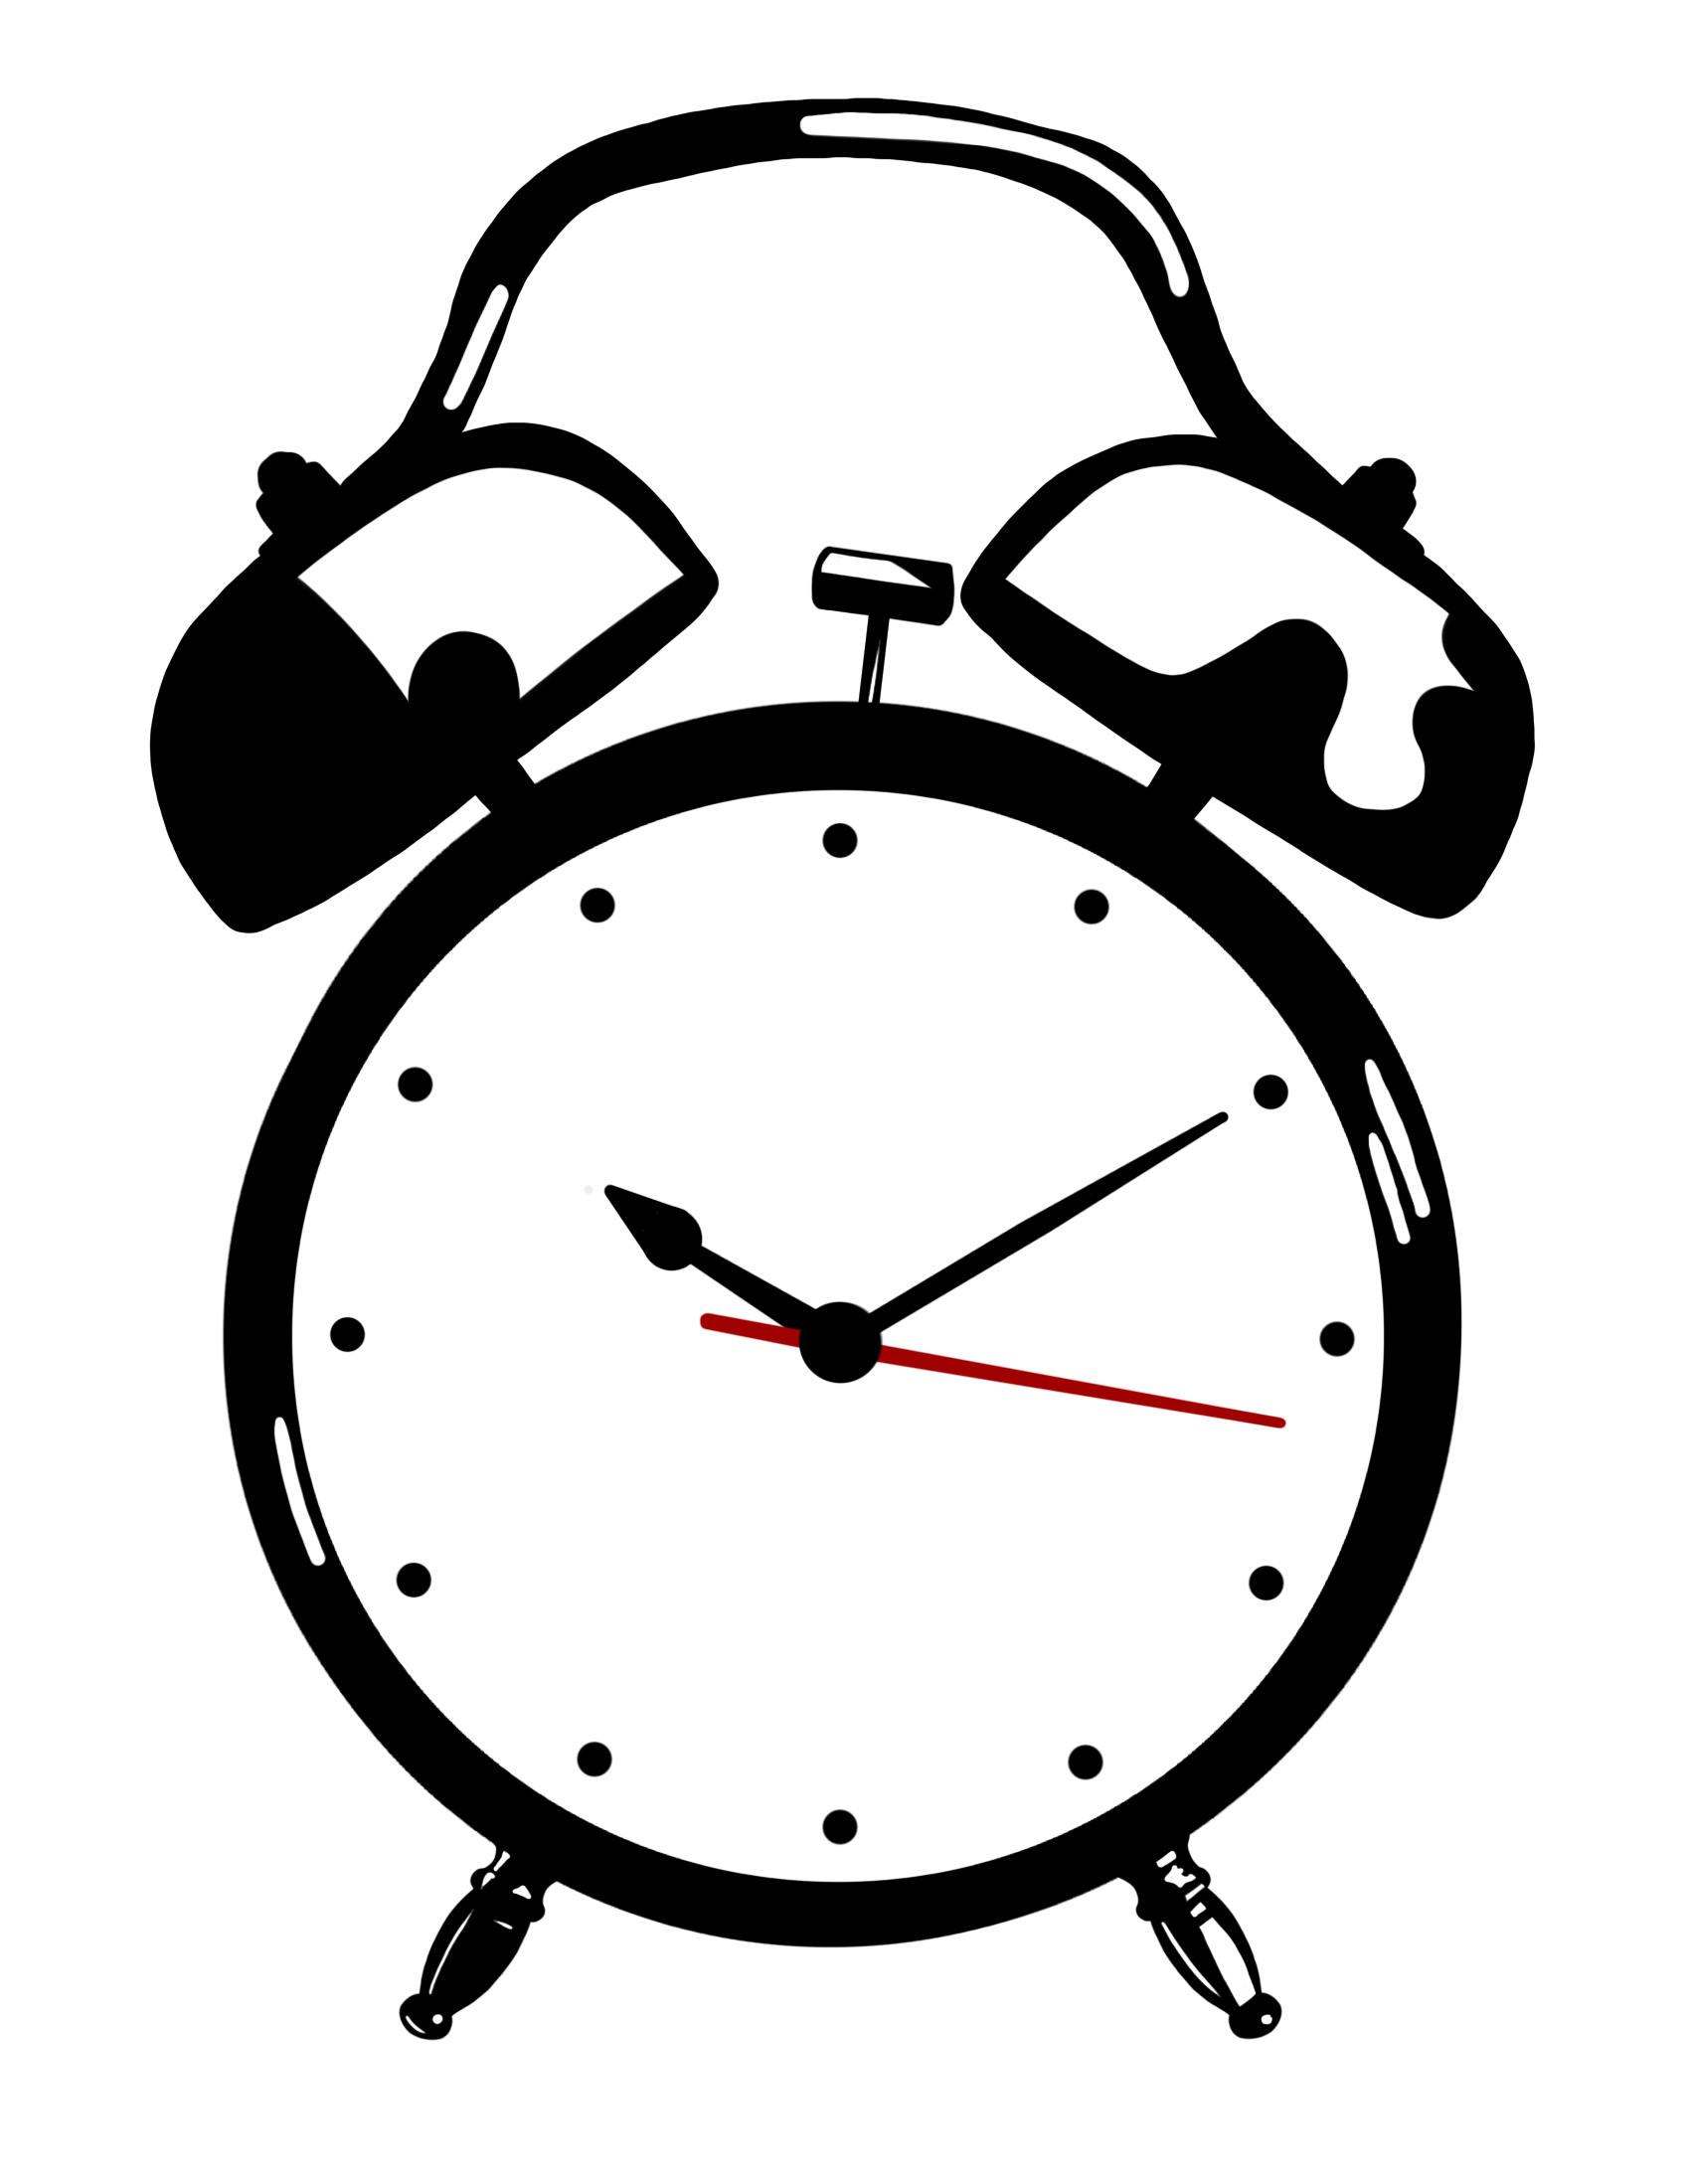 Daylight Saving Clock PNG Image Background